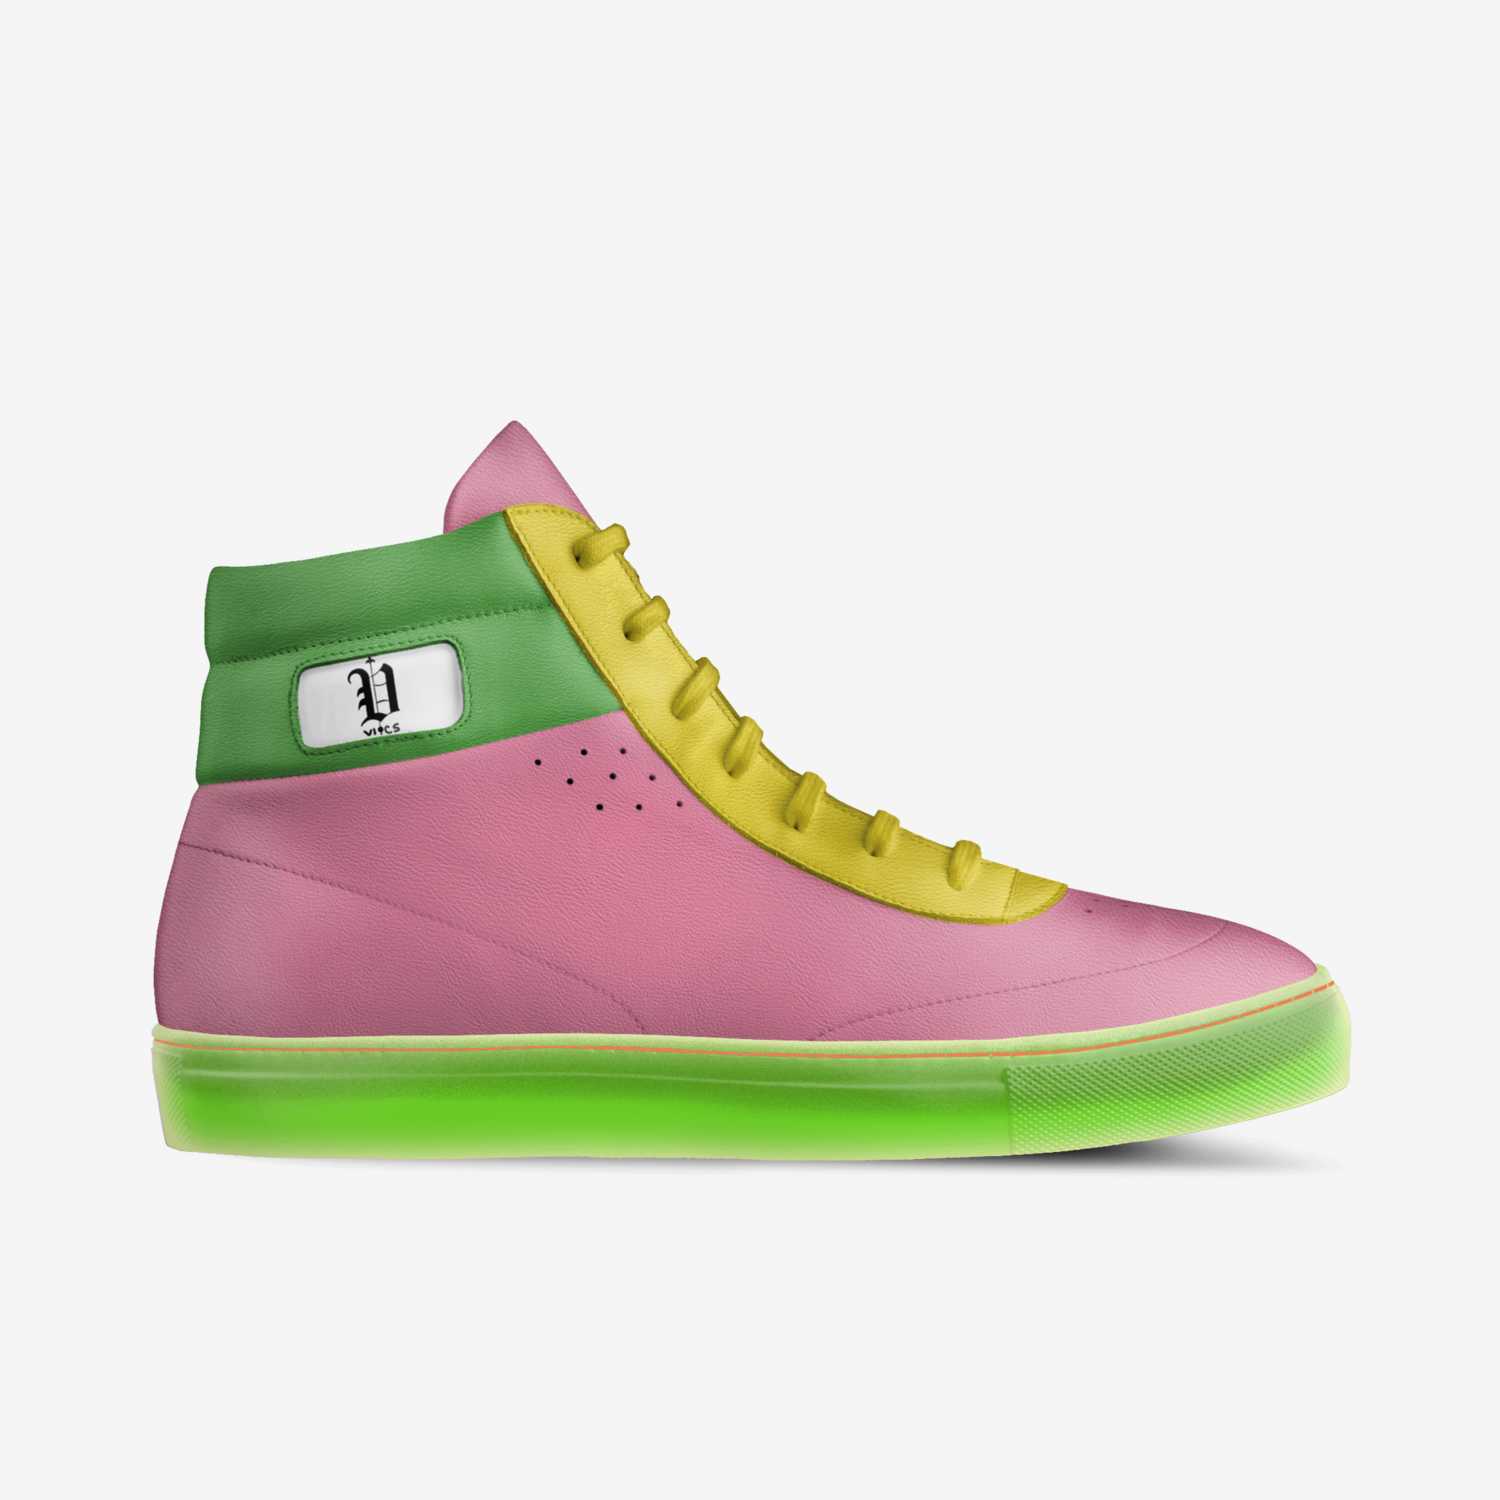 vics 80s style | A Custom Shoe concept by Brayden Murphy